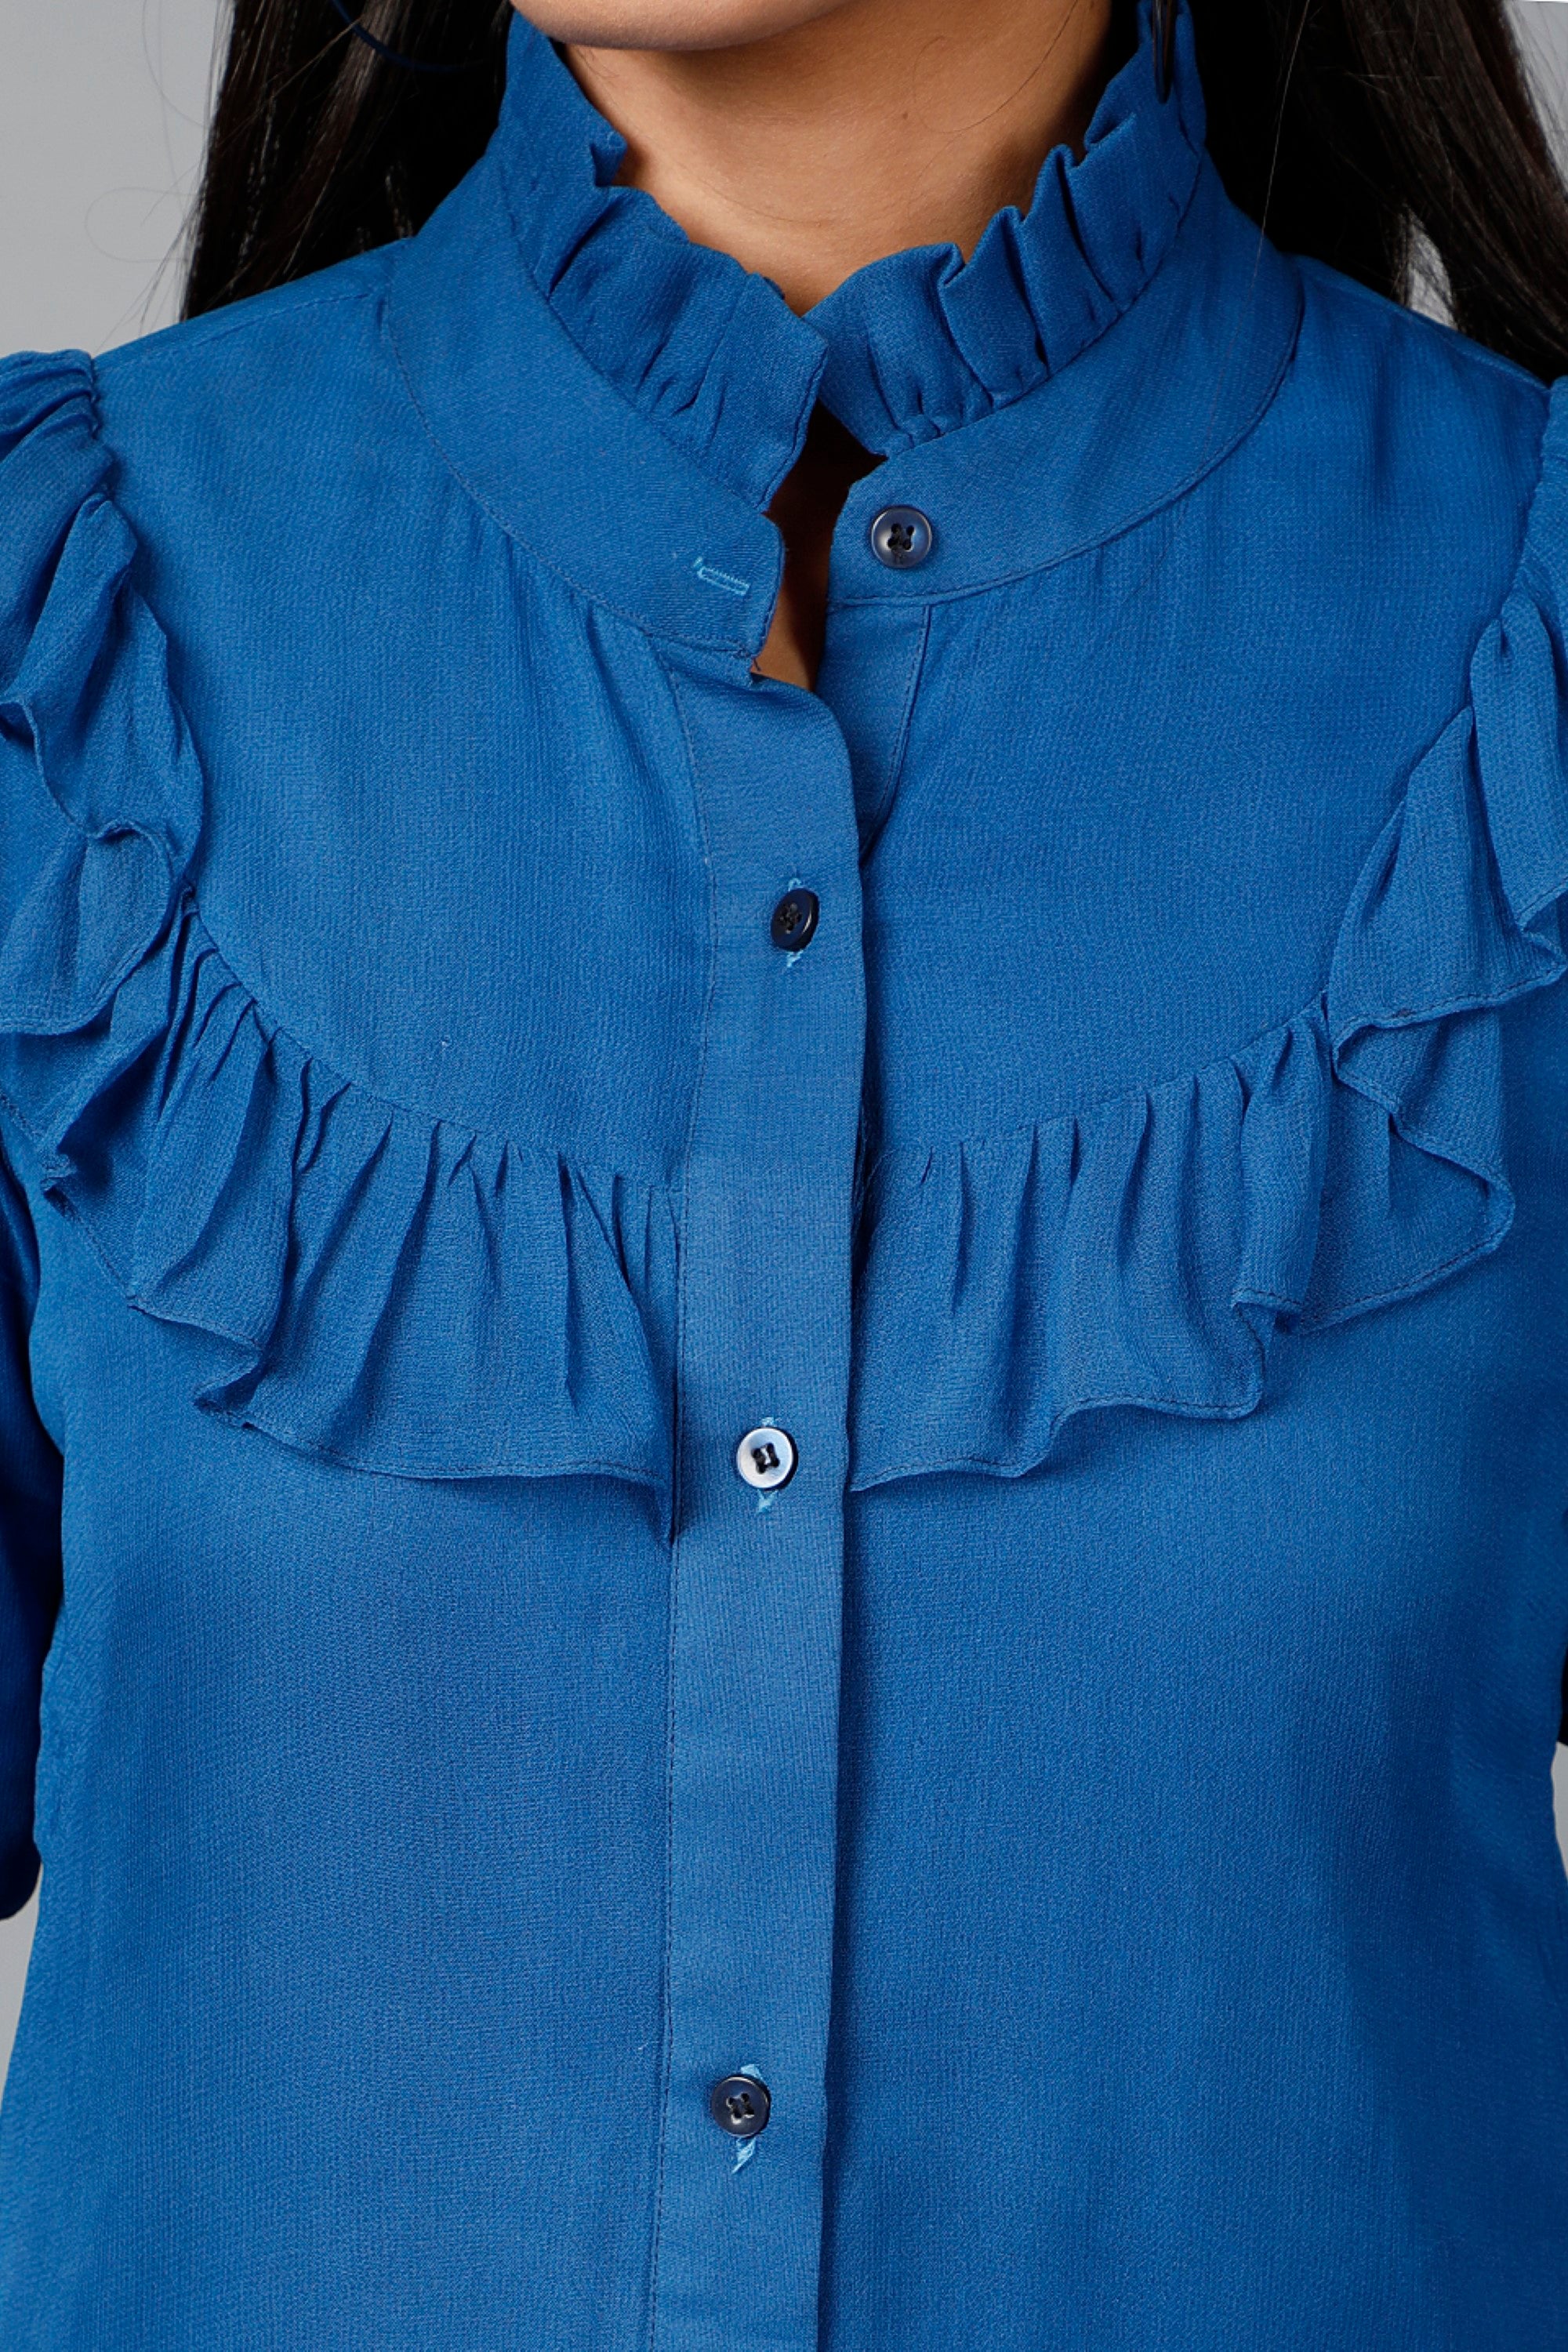 Women's Blue Shirt With Ruffle Yoke And Cuff - MIRACOLOS by Ruchi